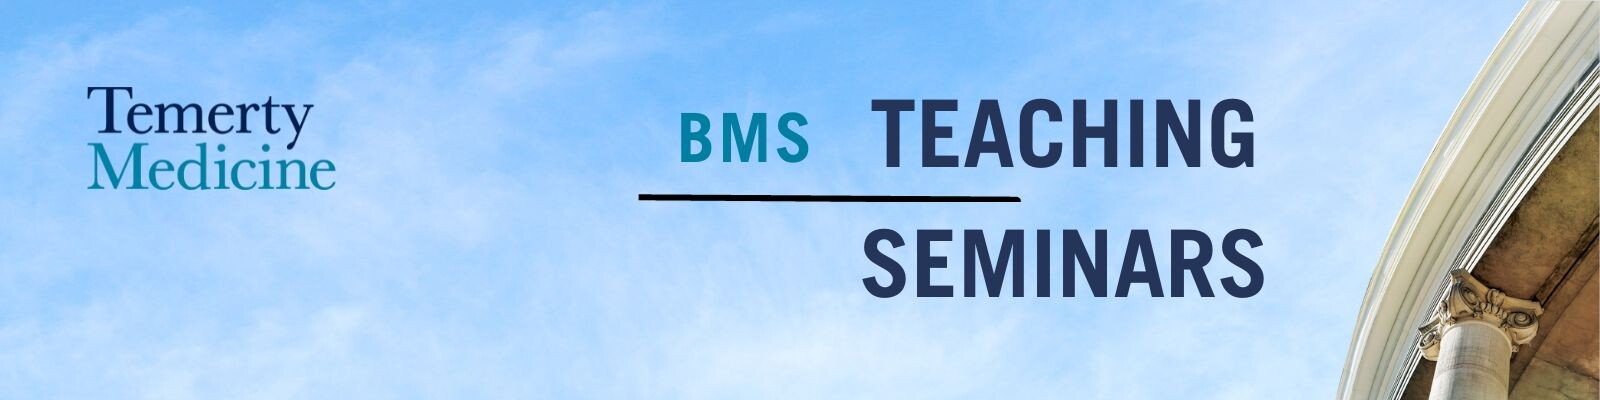 Temerty Medicine logo; BMS Teaching Seminars